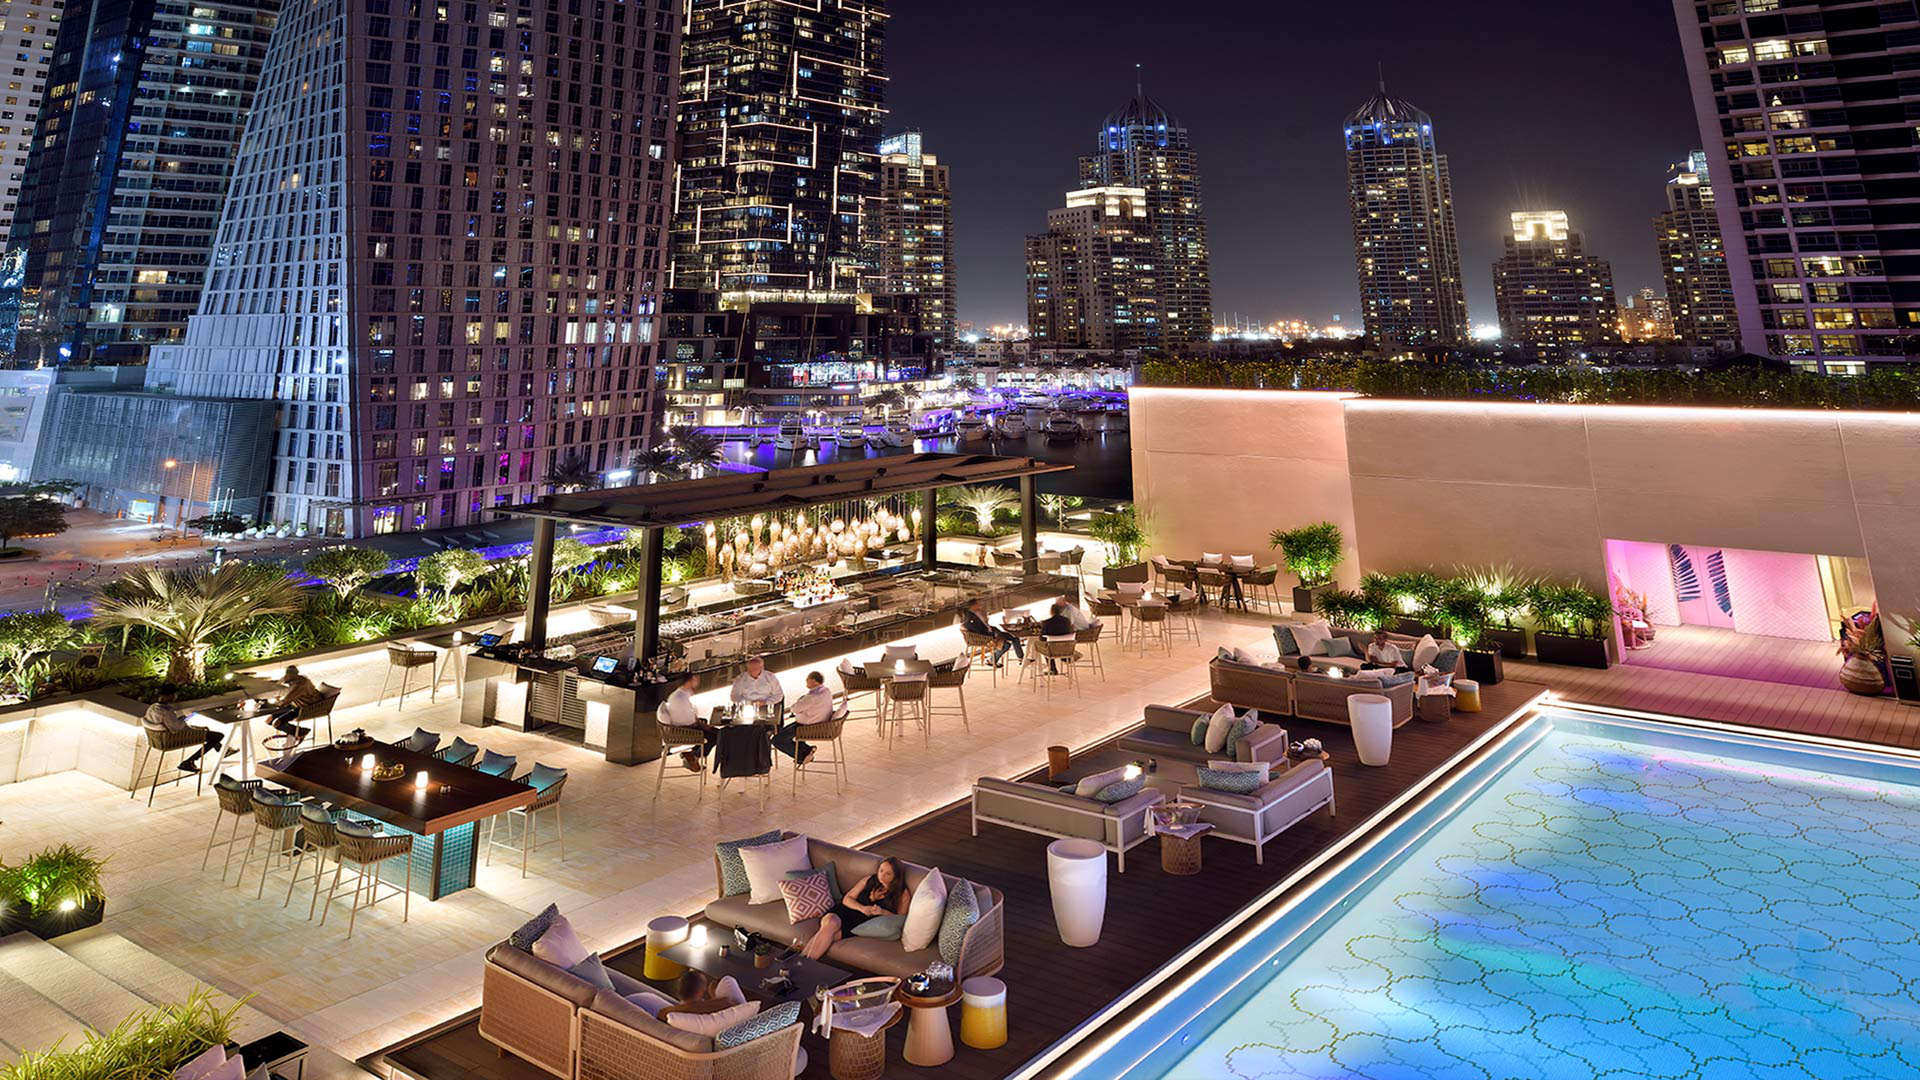 Vue de nuit de la terrasse de la piscine du Grosvenor House Dubai